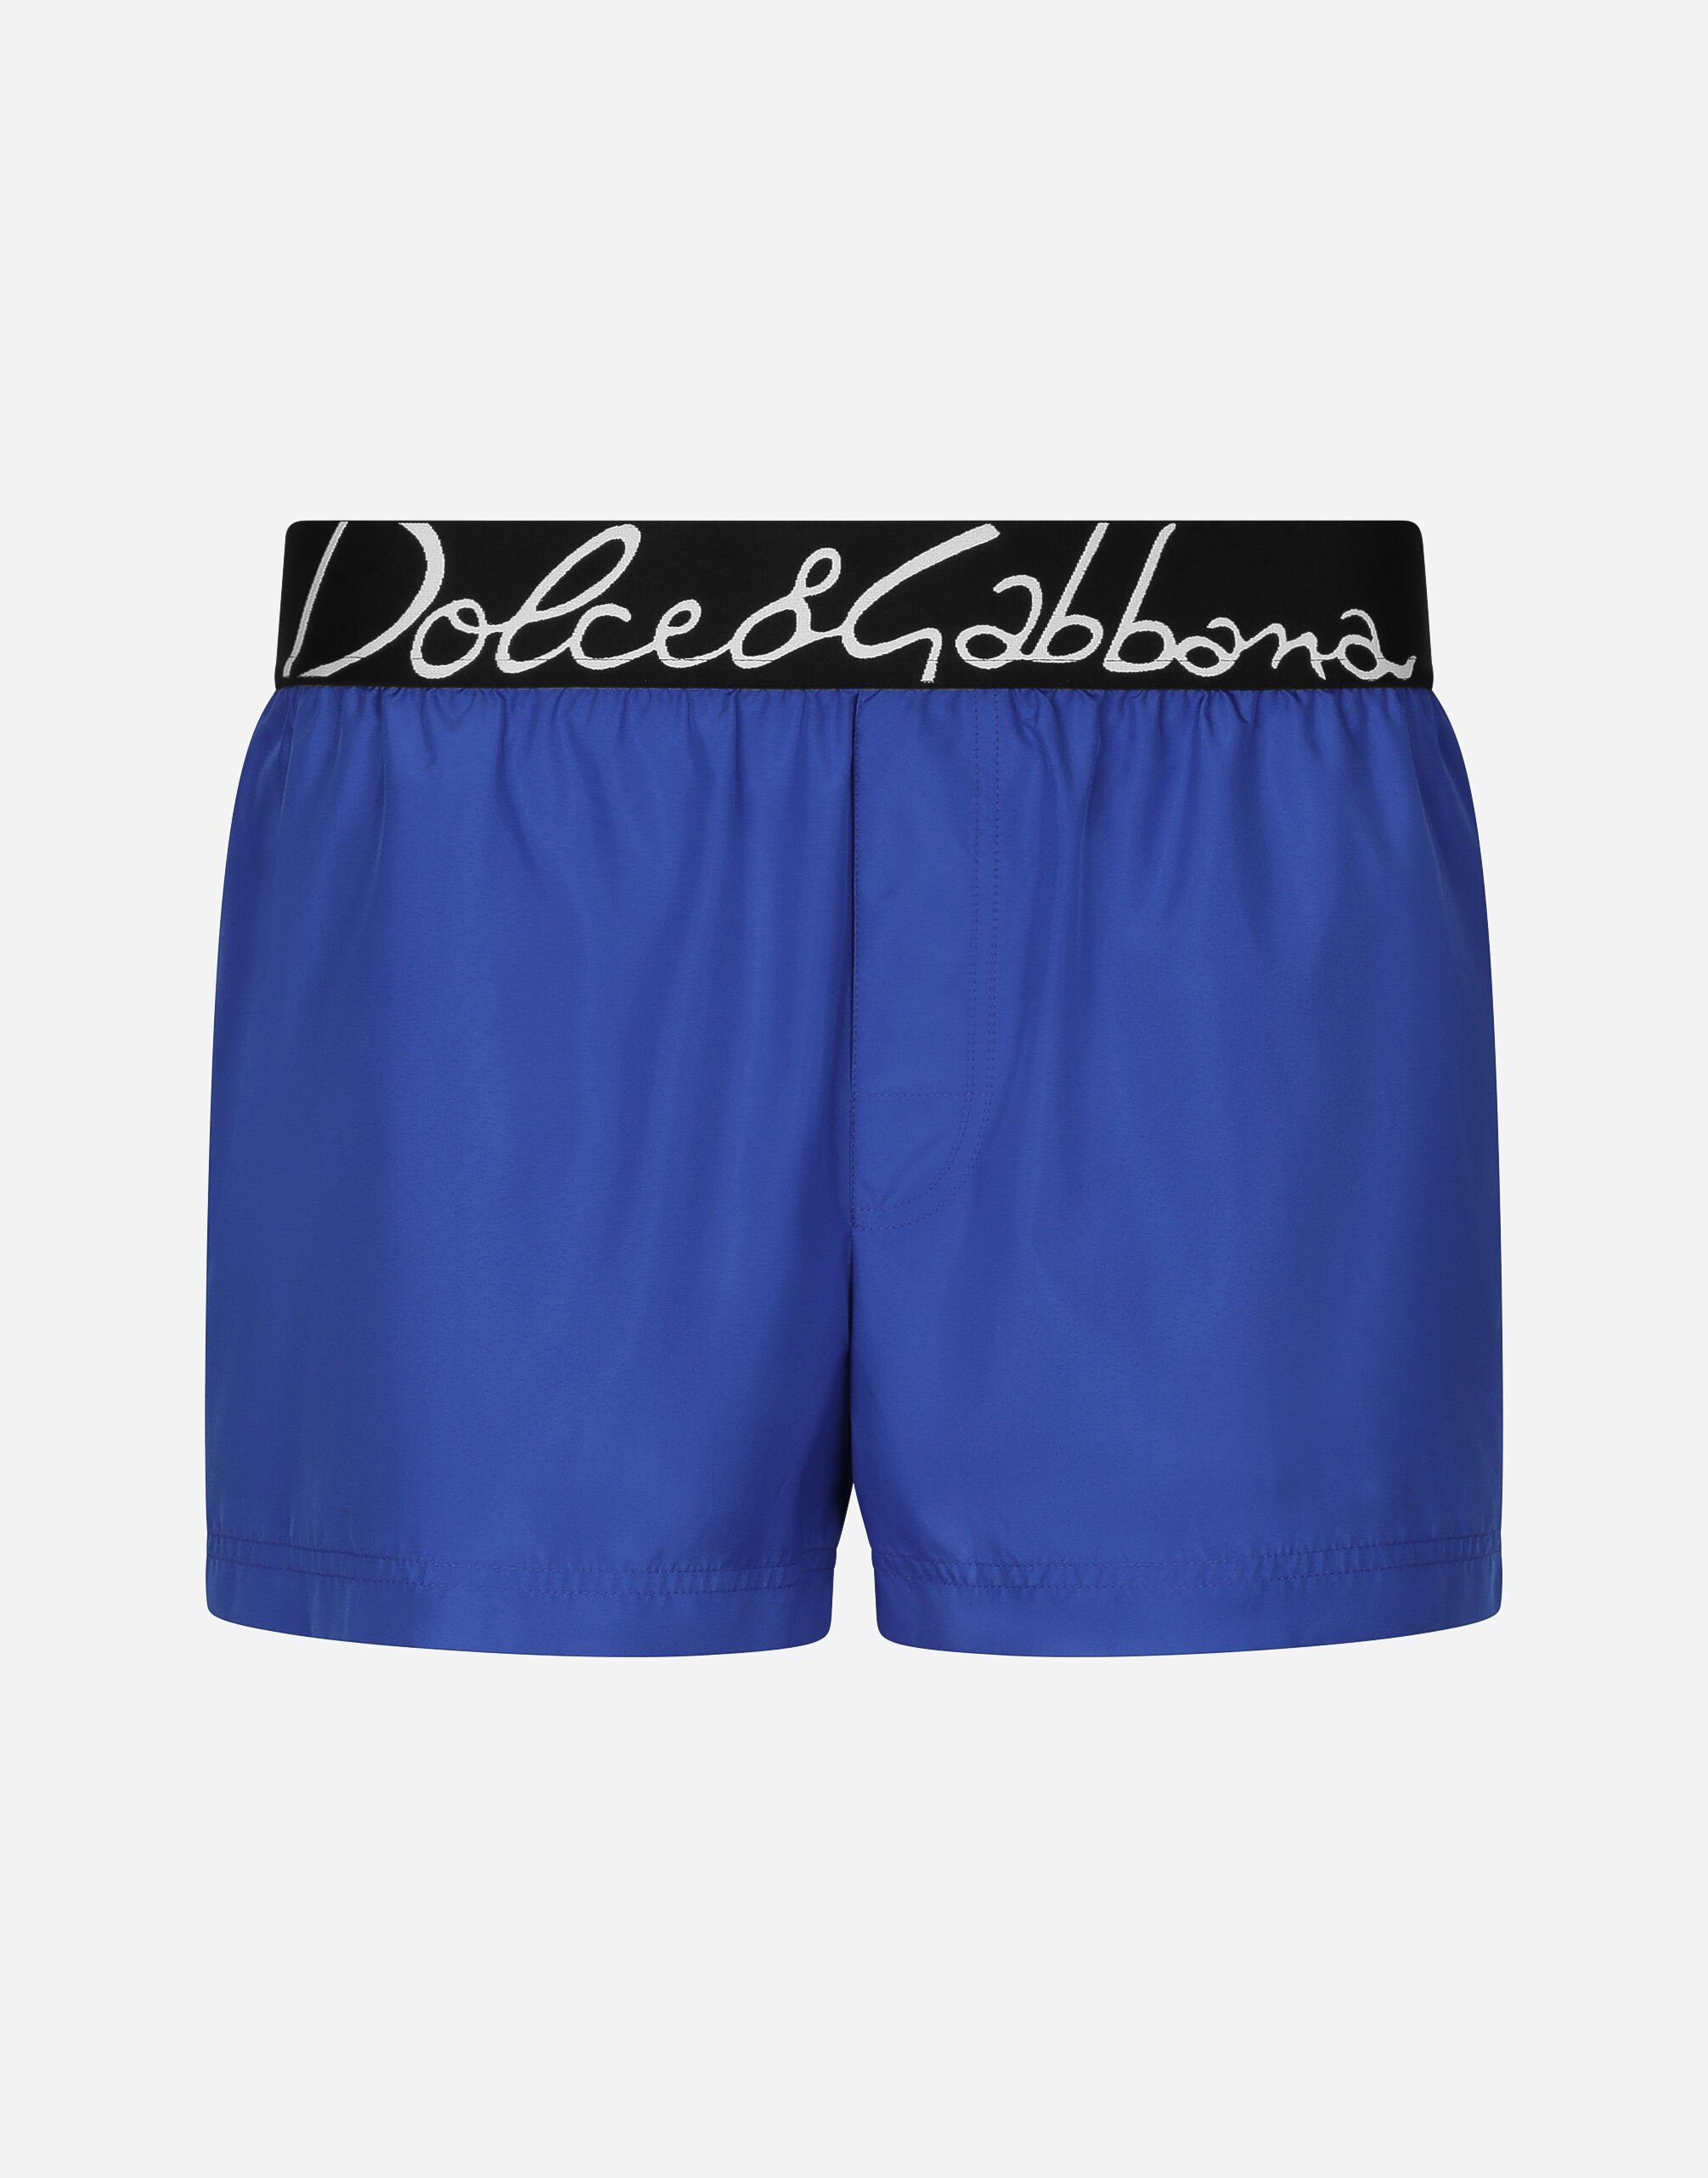 ${brand} Short swim trunks with Dolce&Gabbana logo ${colorDescription} ${masterID}